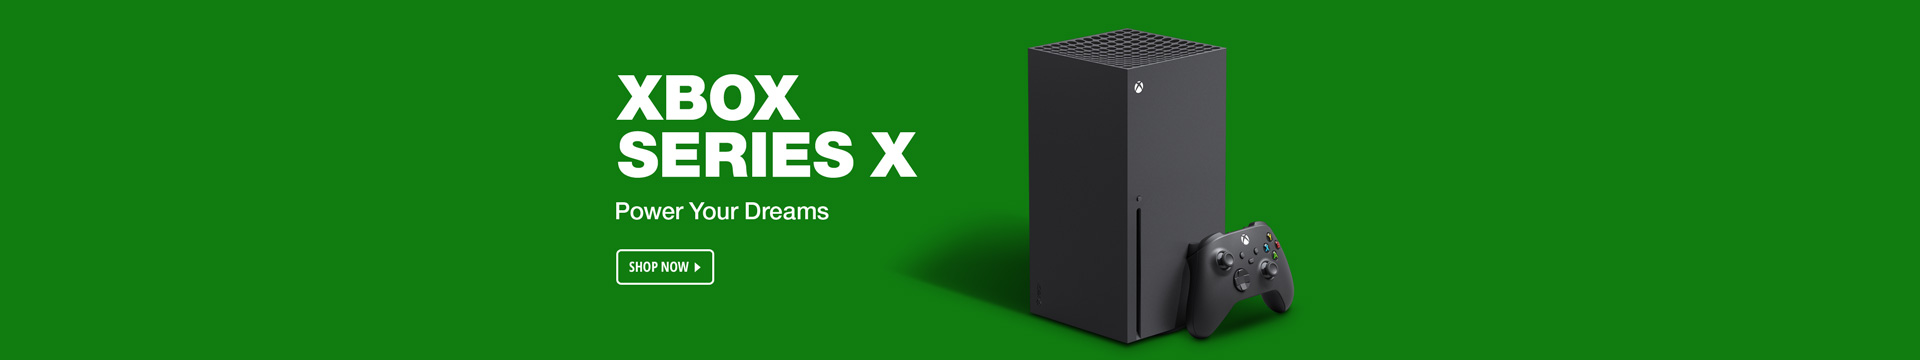 xbox series x shop